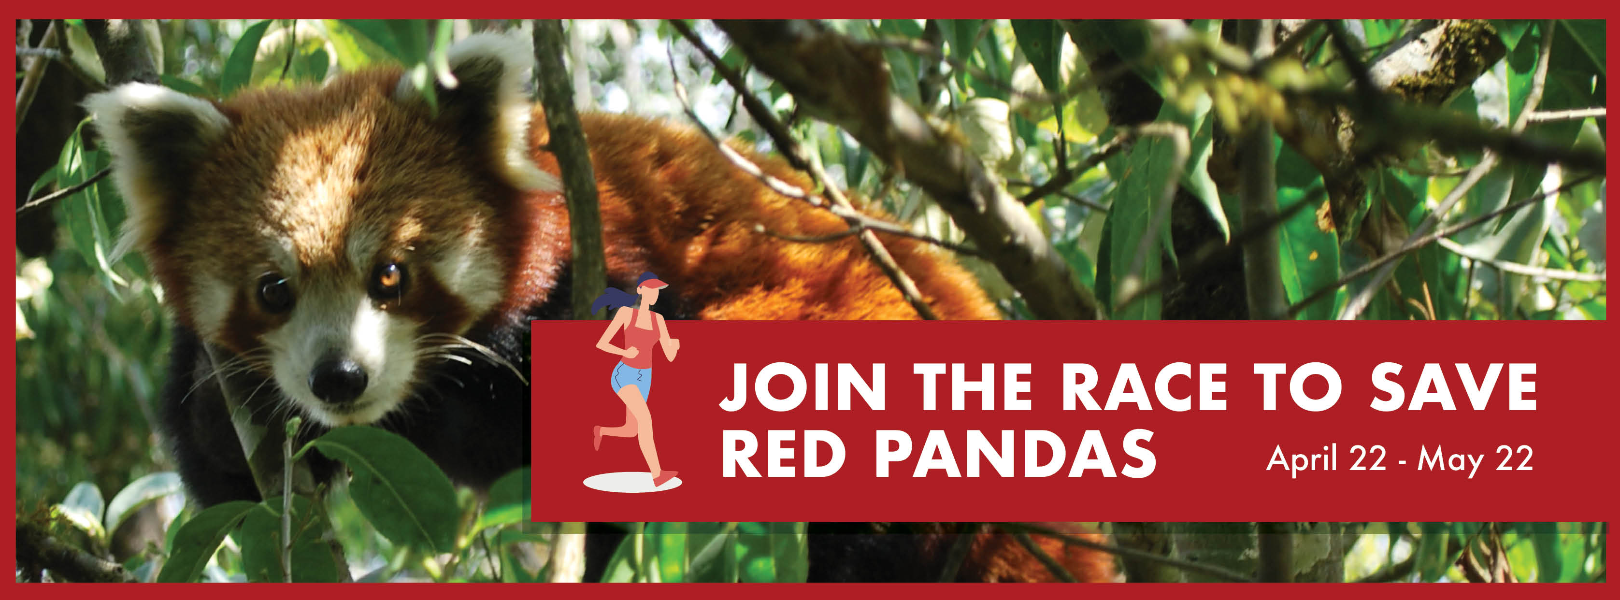 Run for Red Pandas